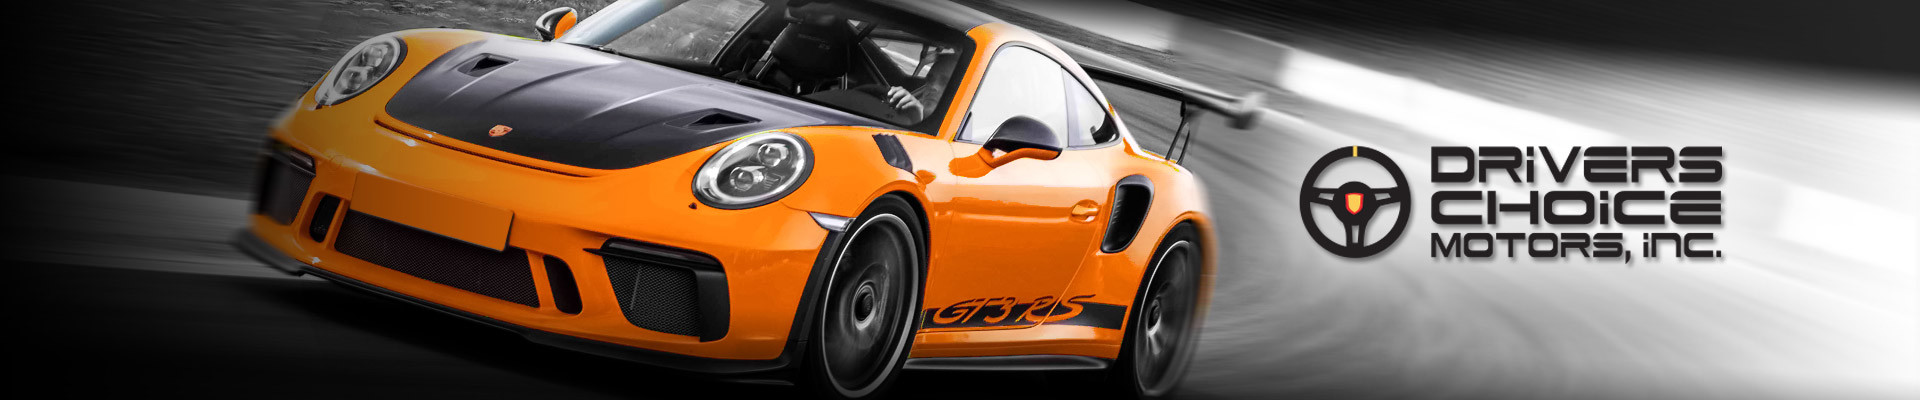 Independent Porsche Mechanics Drivers Choice Motors a specialist Porsche repair shop in Orlando Florida